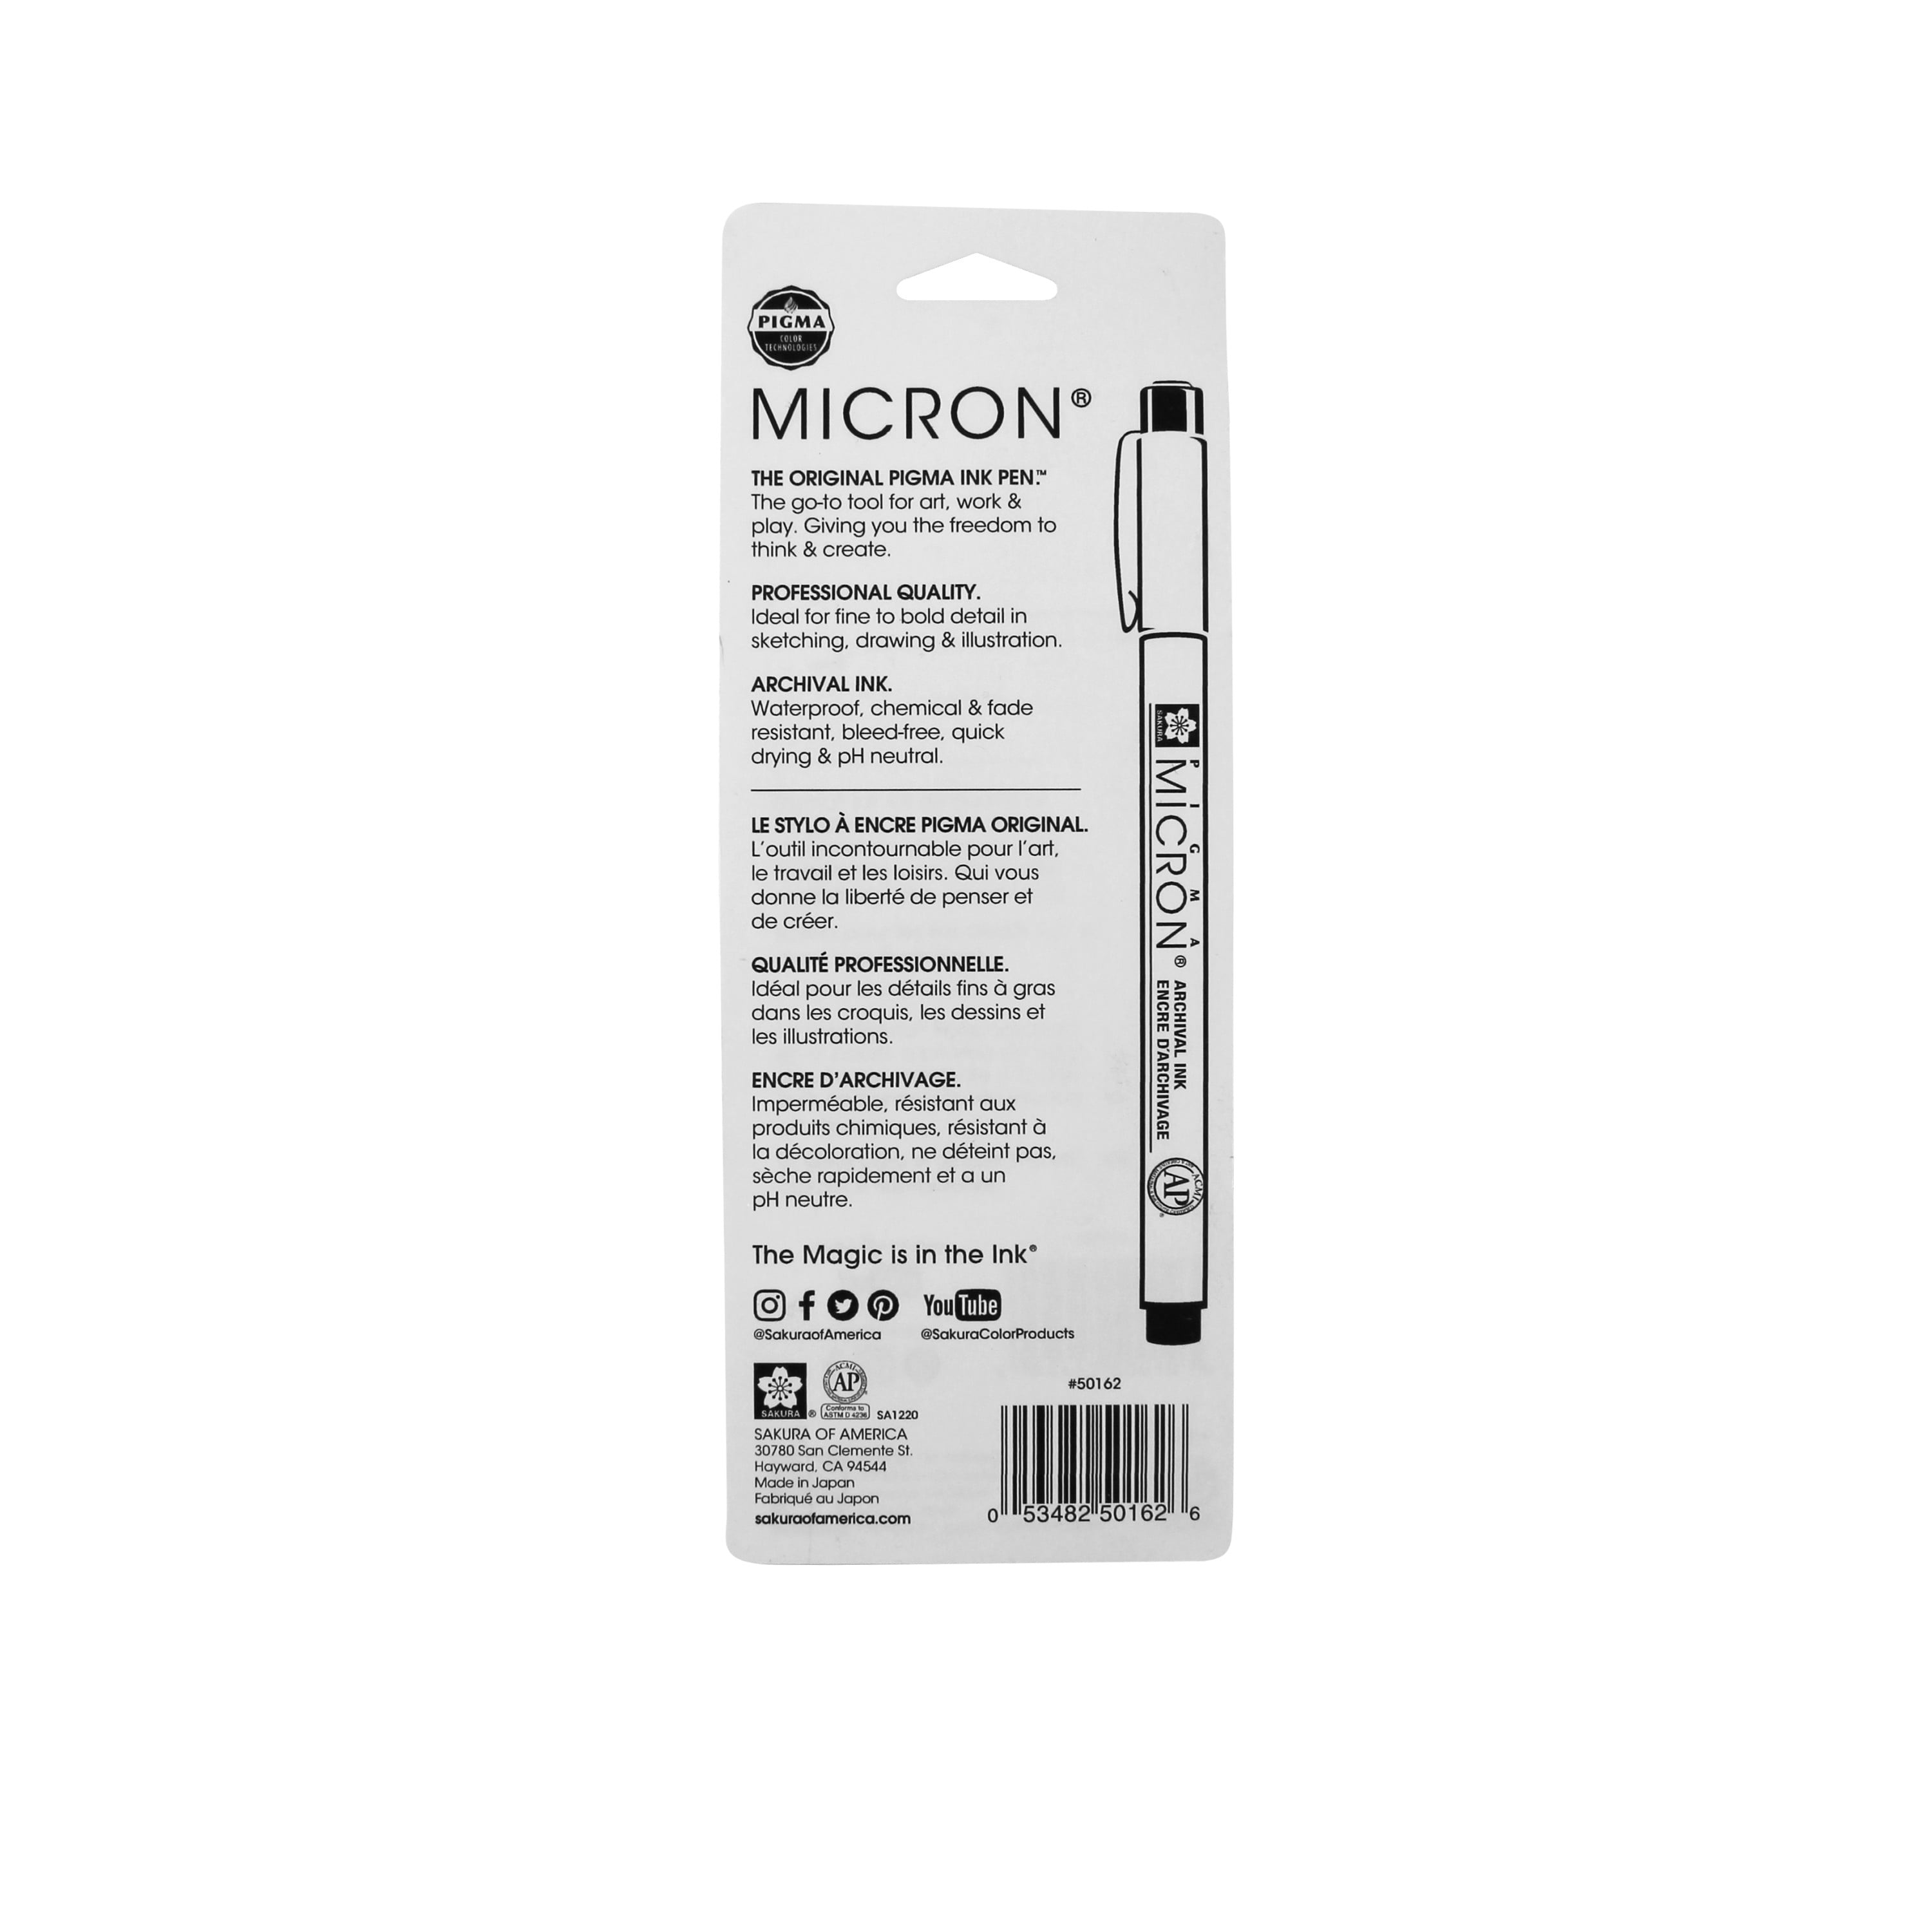 Sakura Pigma Micron PN - A One-Stop Pen! - ByTheWell4God